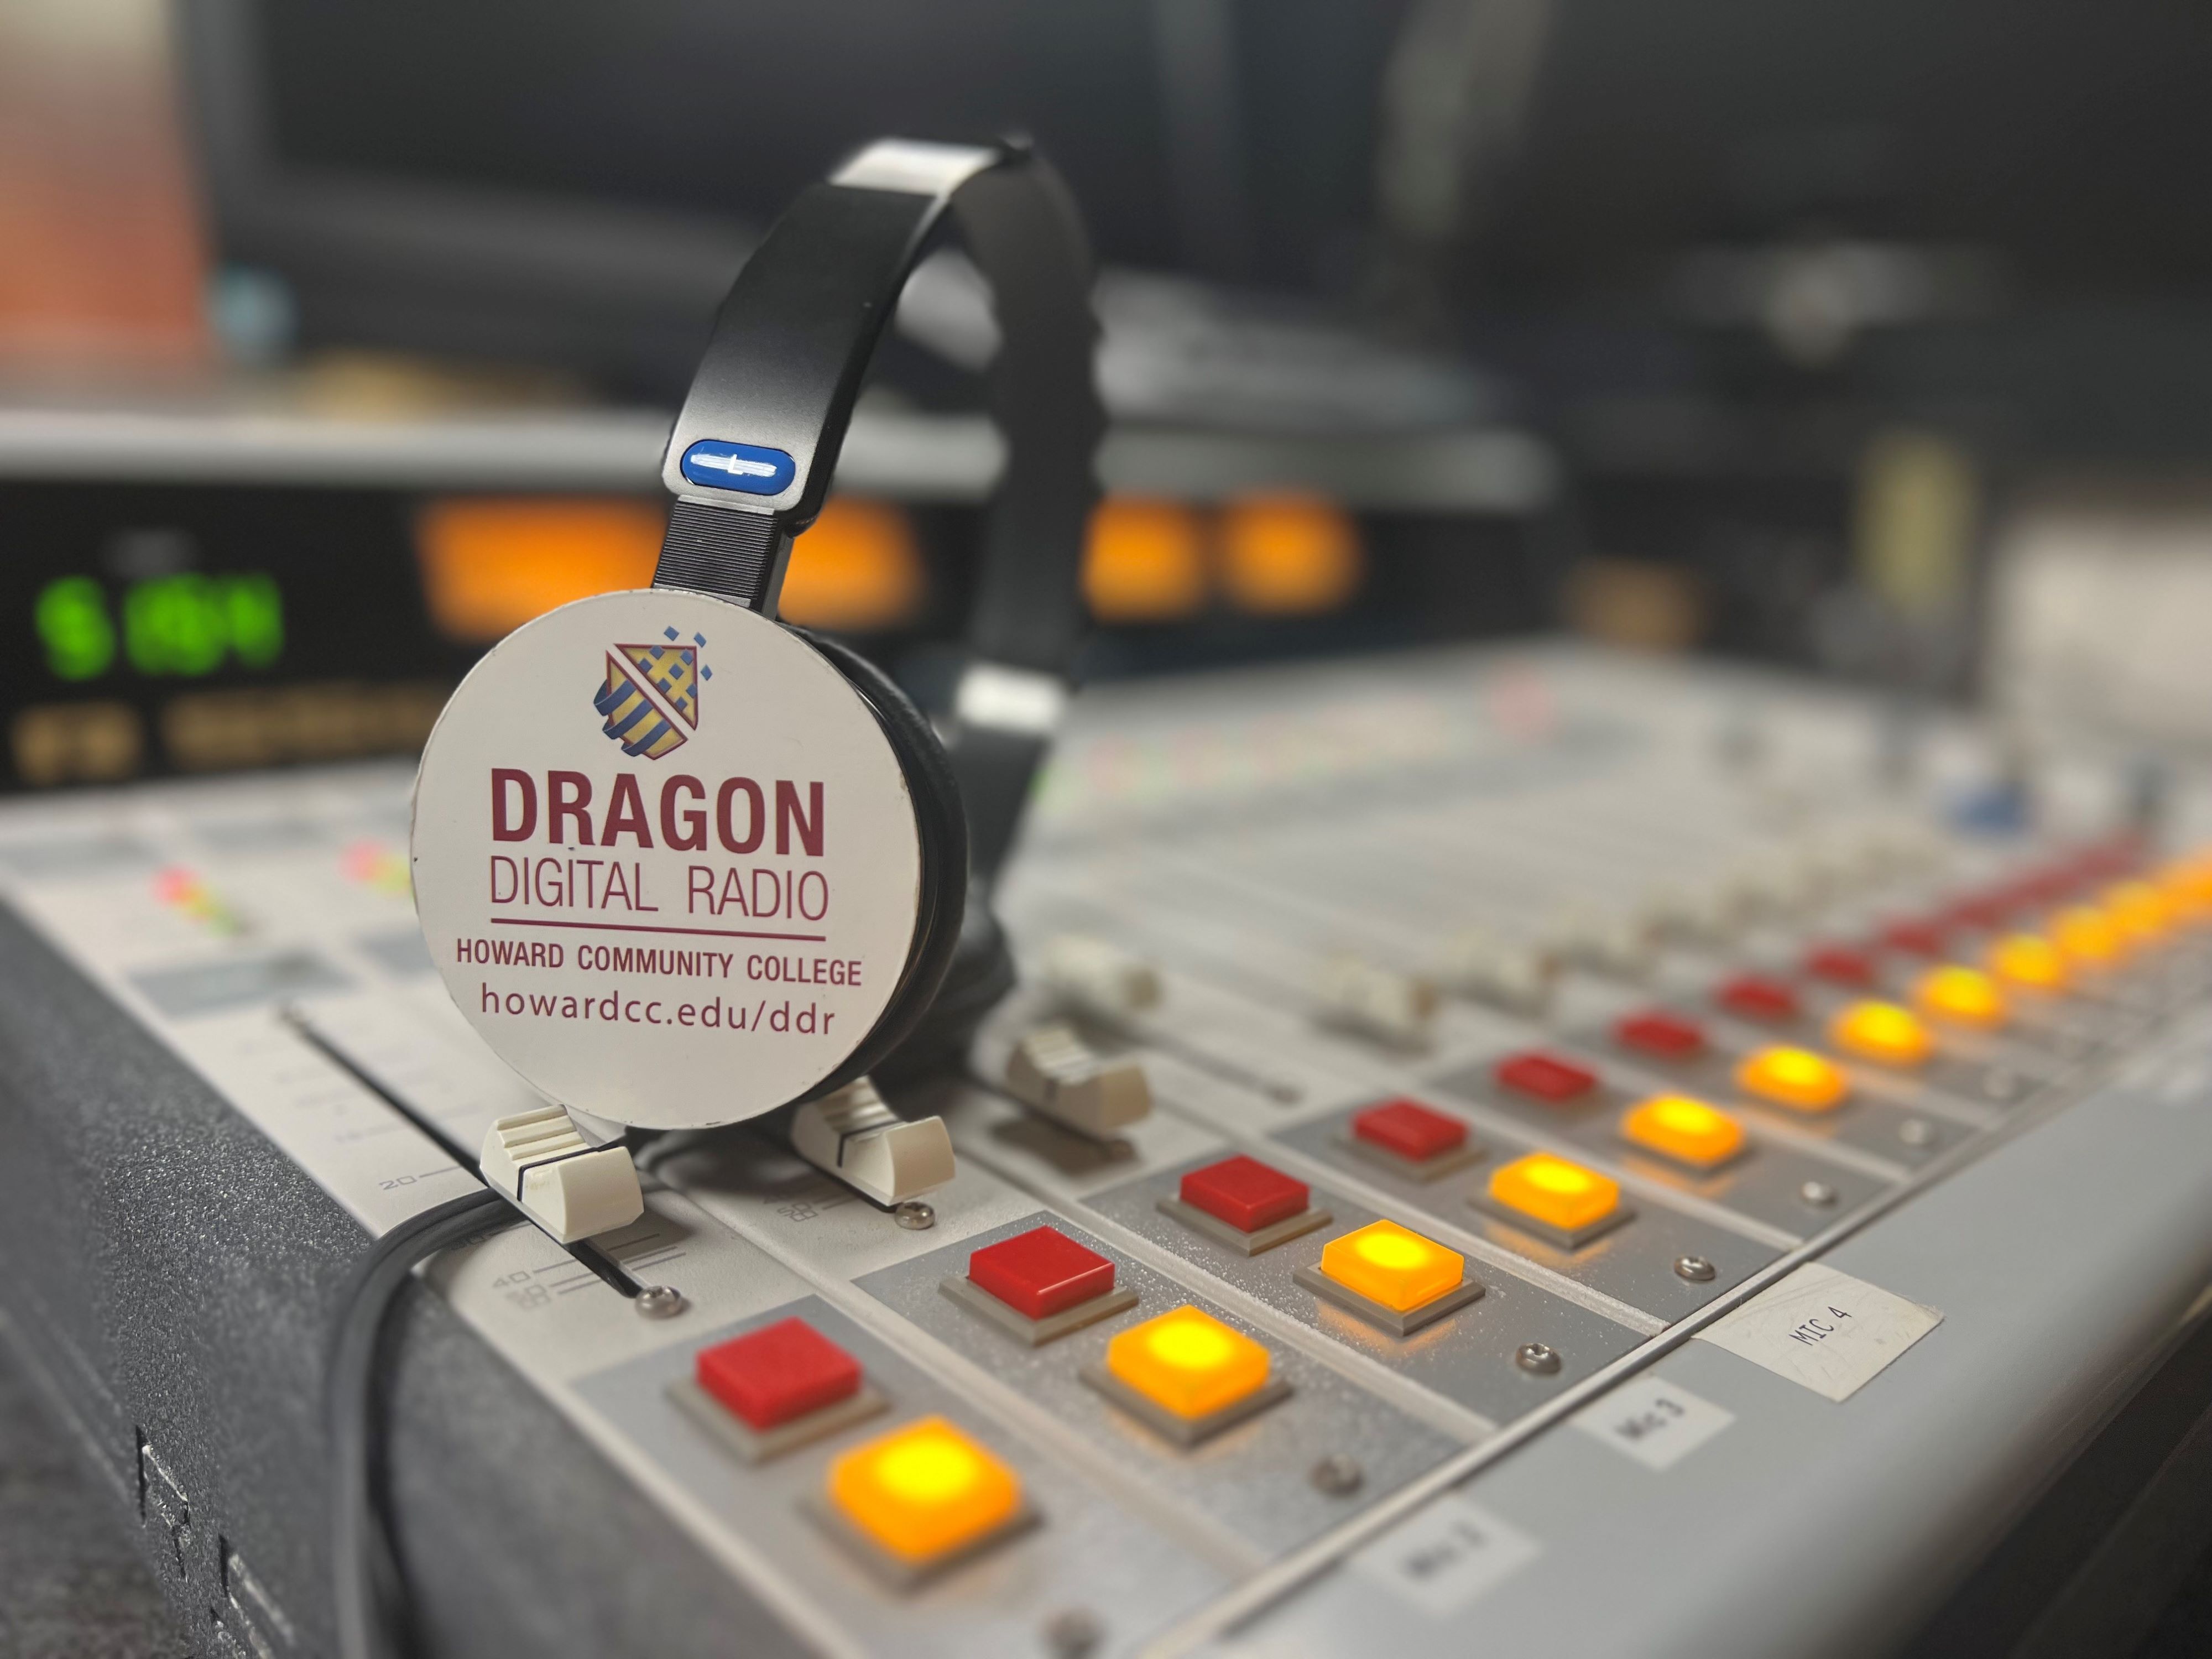 Dragon Digital Radio at Howard Community College